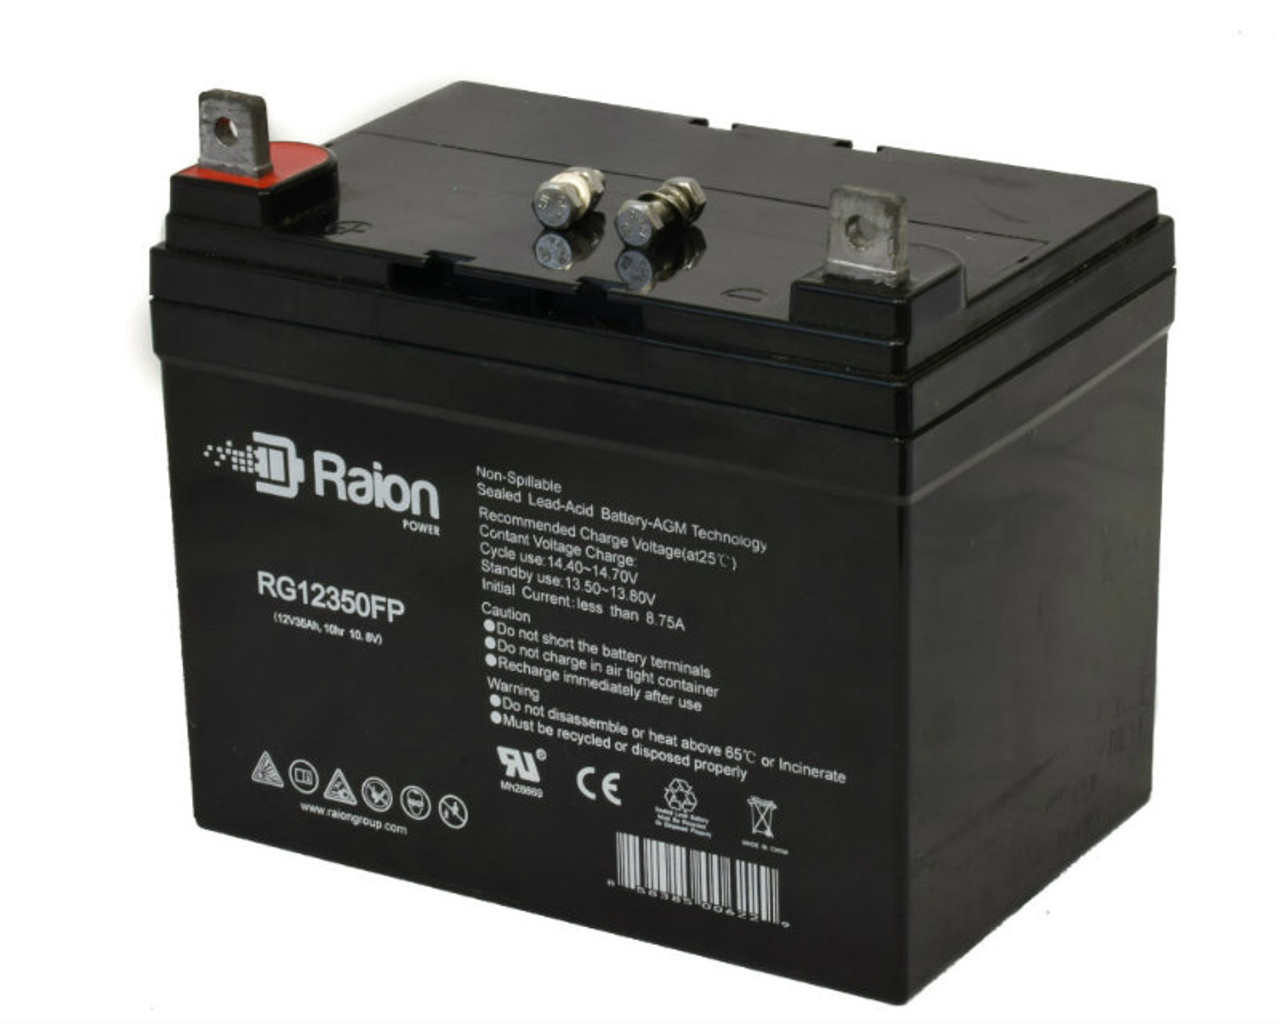 Raion Power Replacement 12V 35Ah RG12350FP Battery for Zipper TS-2293